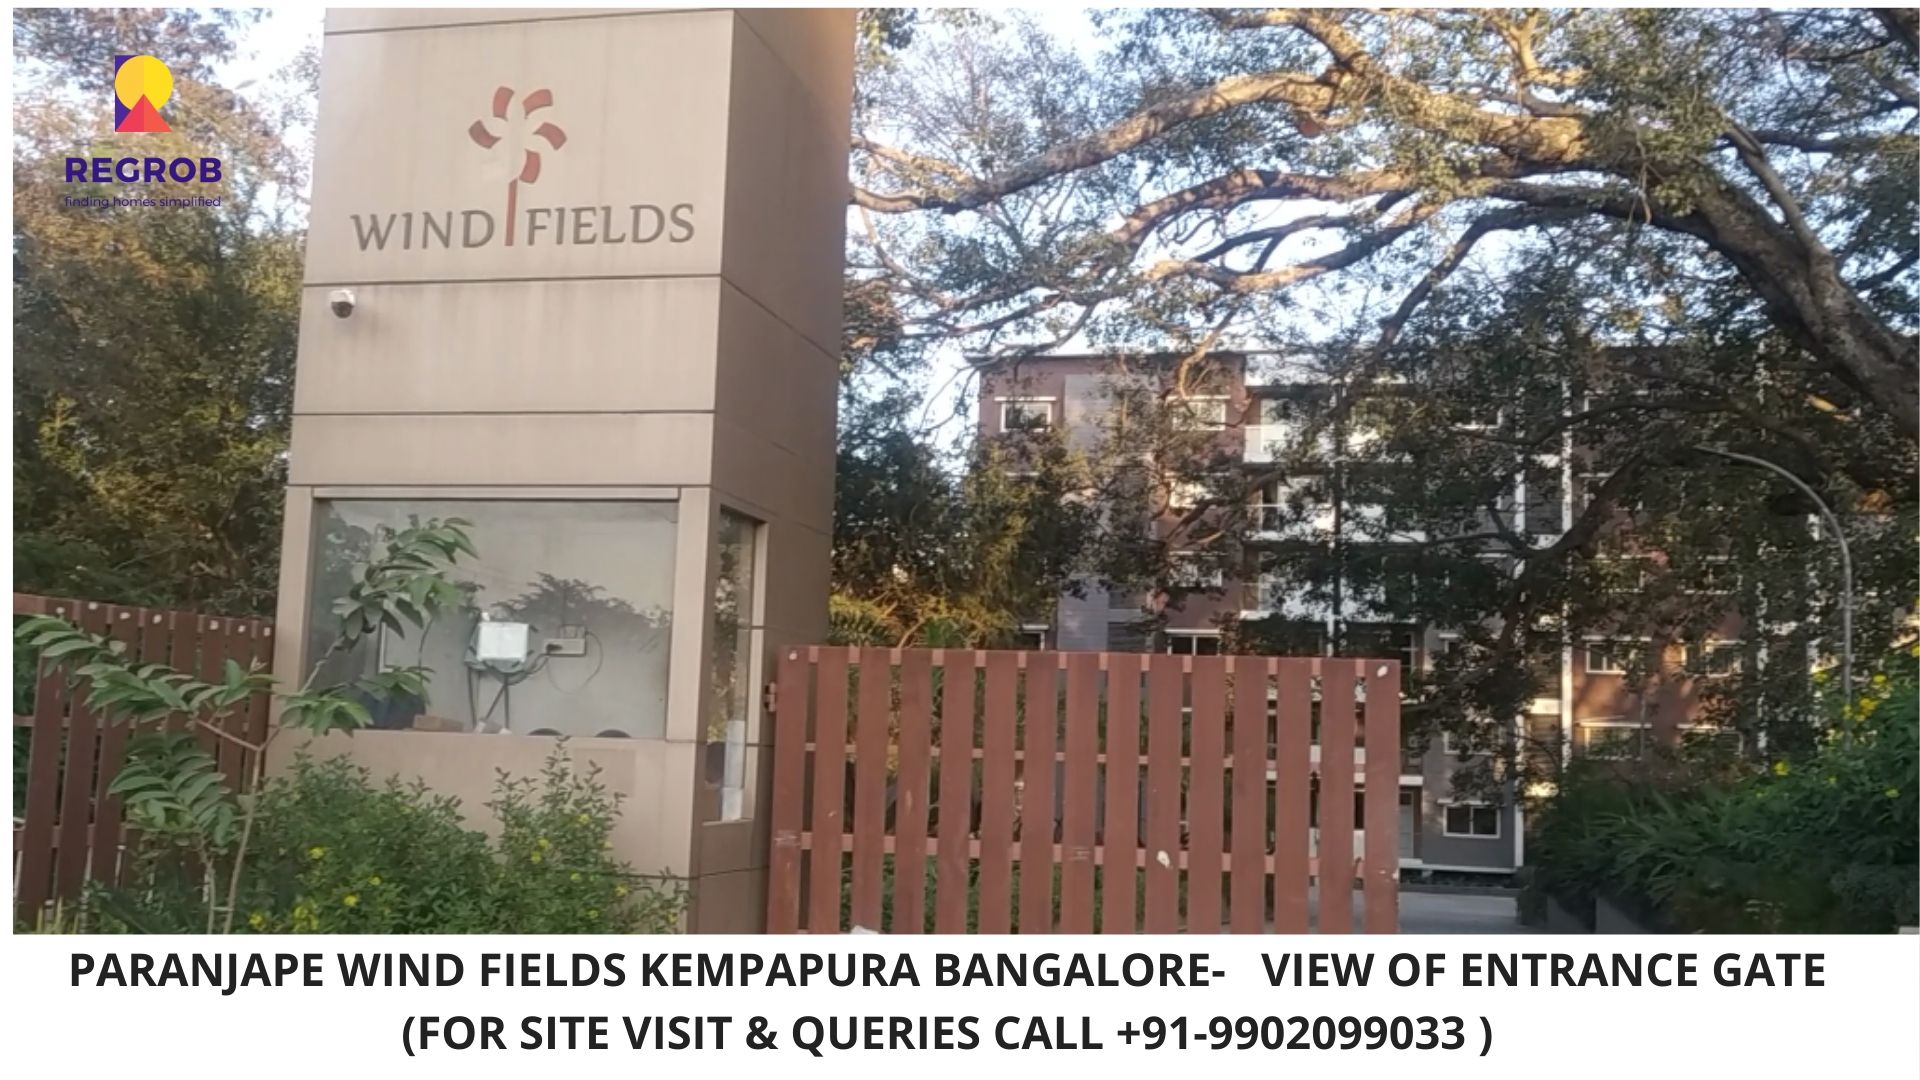 Paranjape Wind Fields Yemalur Road, Kempapura Bangalore